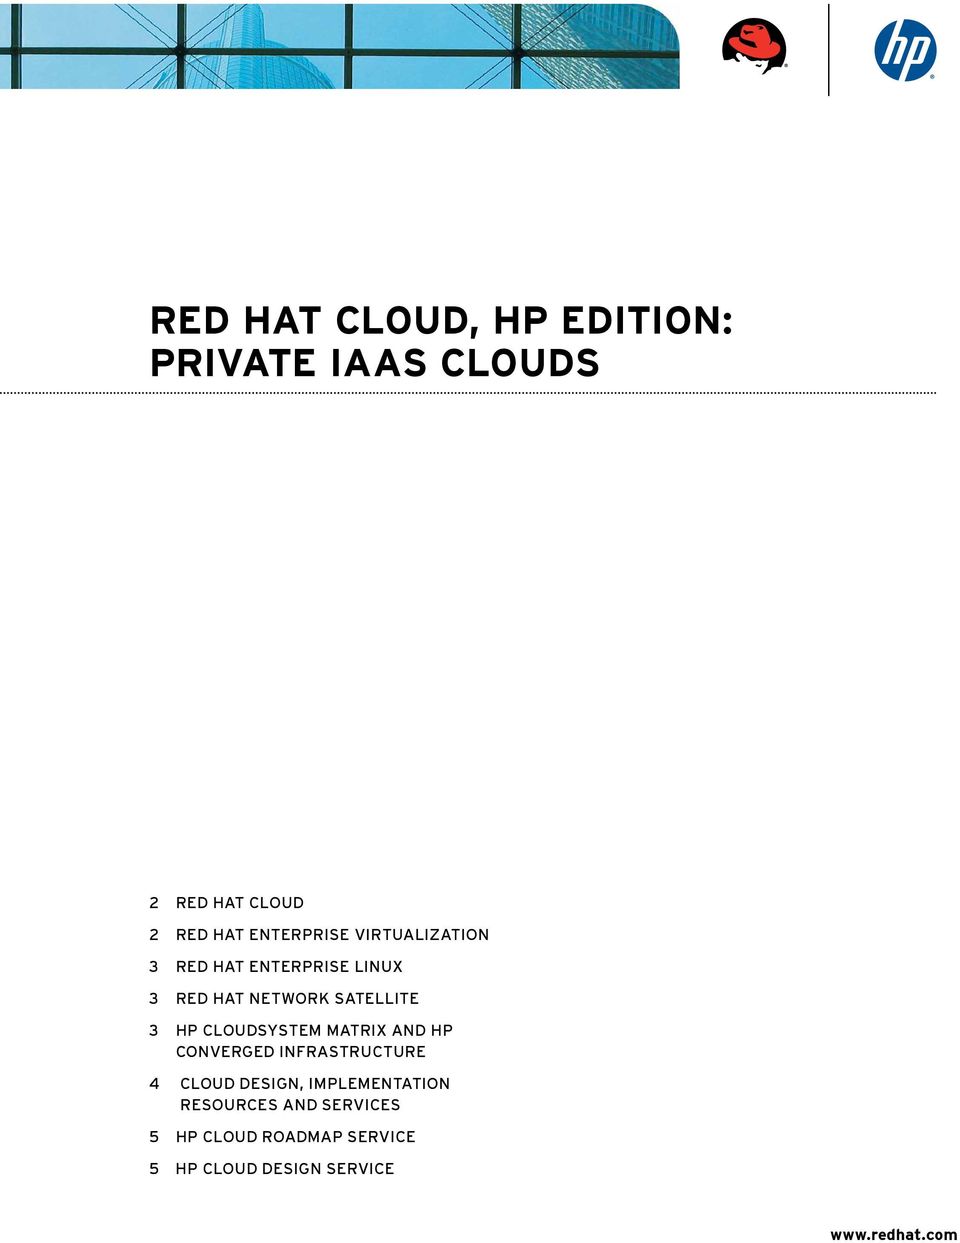 HP CloudSystem Matrix and HP Converged Infrastructure 4 Cloud Design,